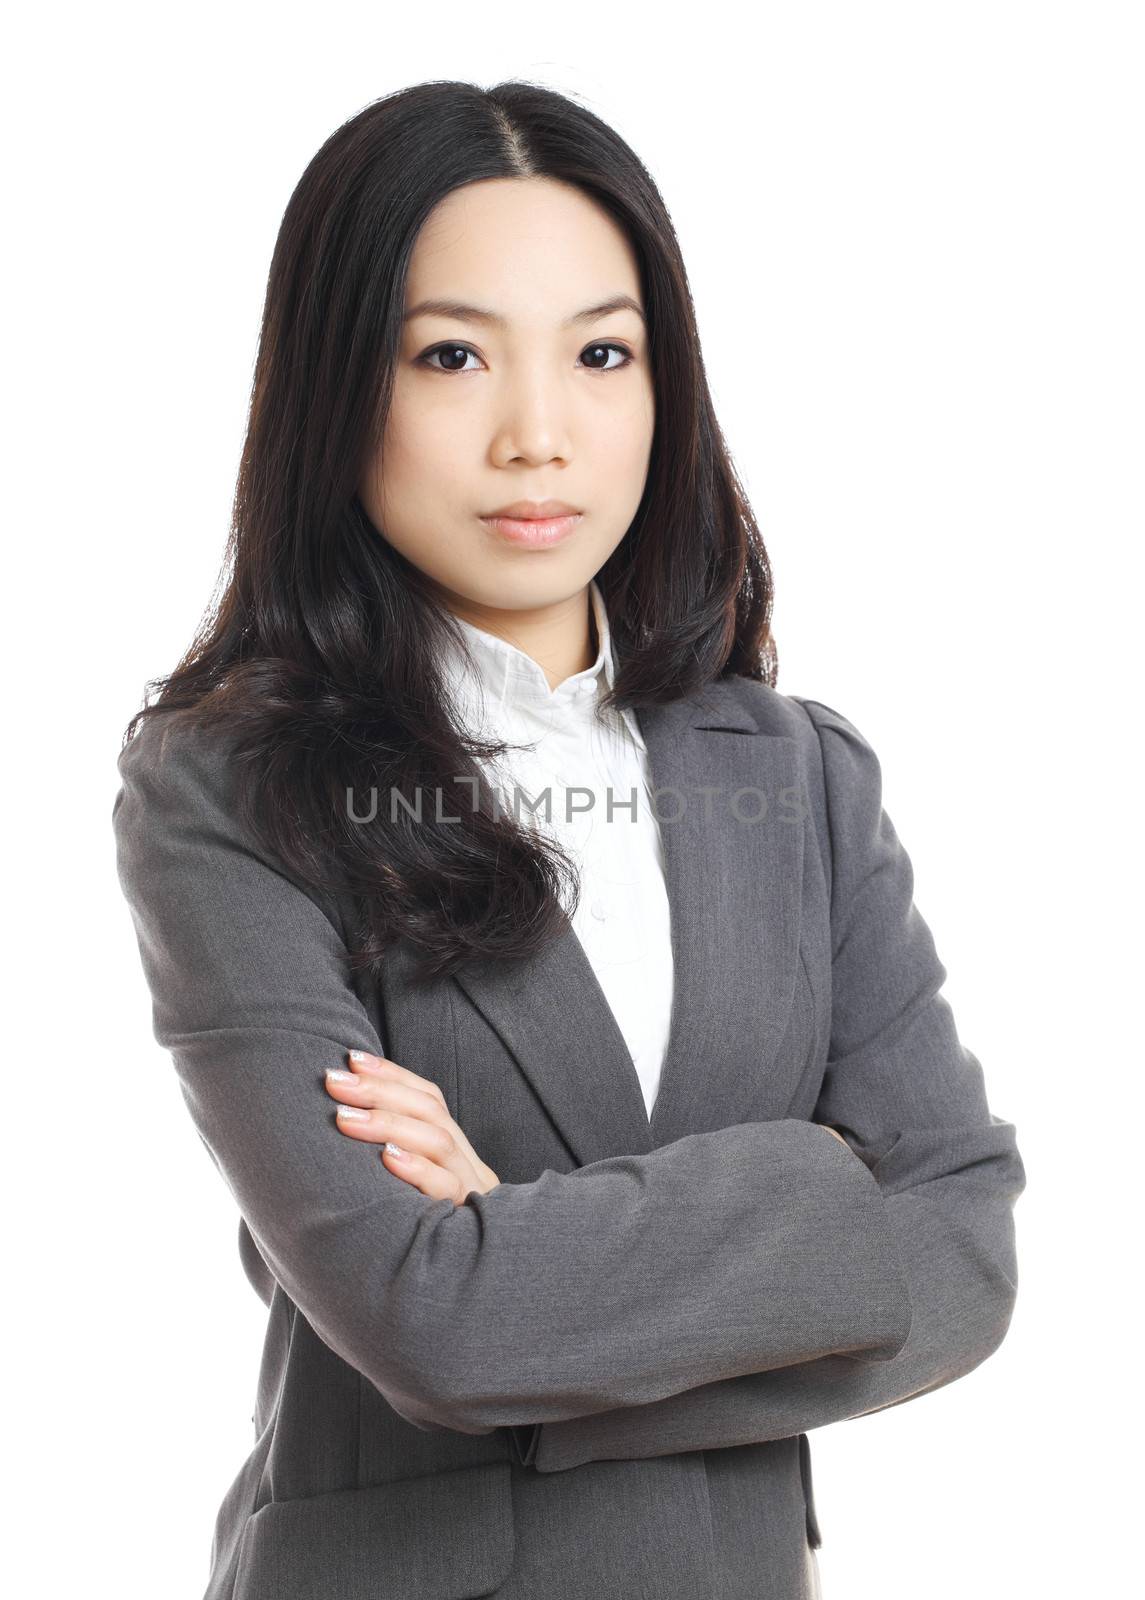 Asian business woman